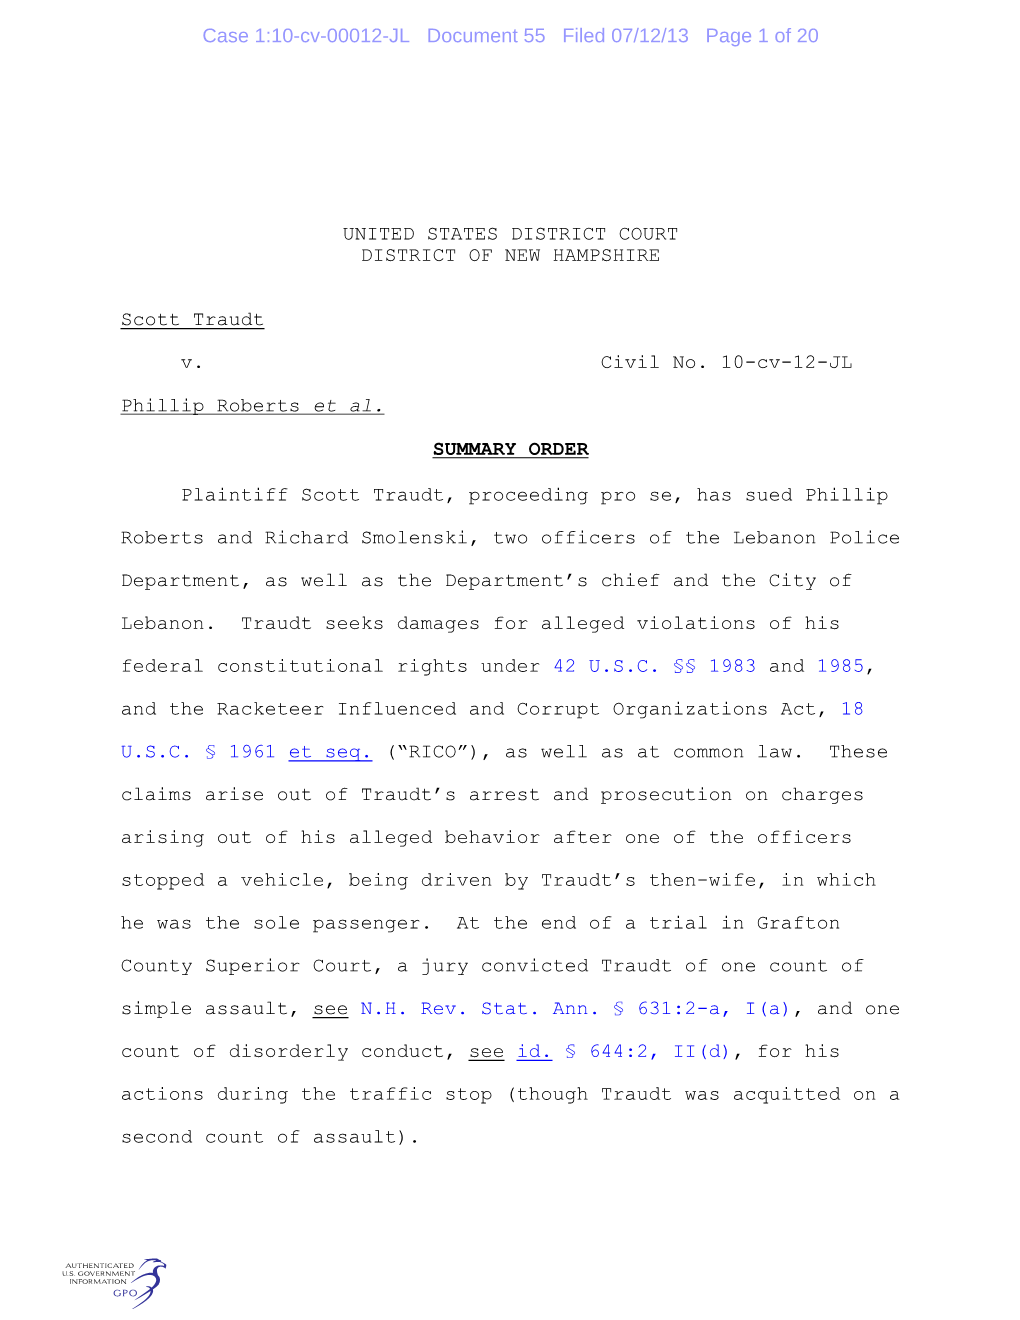 UNITED STATES DISTRICT COURT DISTRICT of NEW HAMPSHIRE Scott Traudt V. Civil No. 10-Cv-12-JL Phillip Roberts Et Al. SUMMARY ORDE